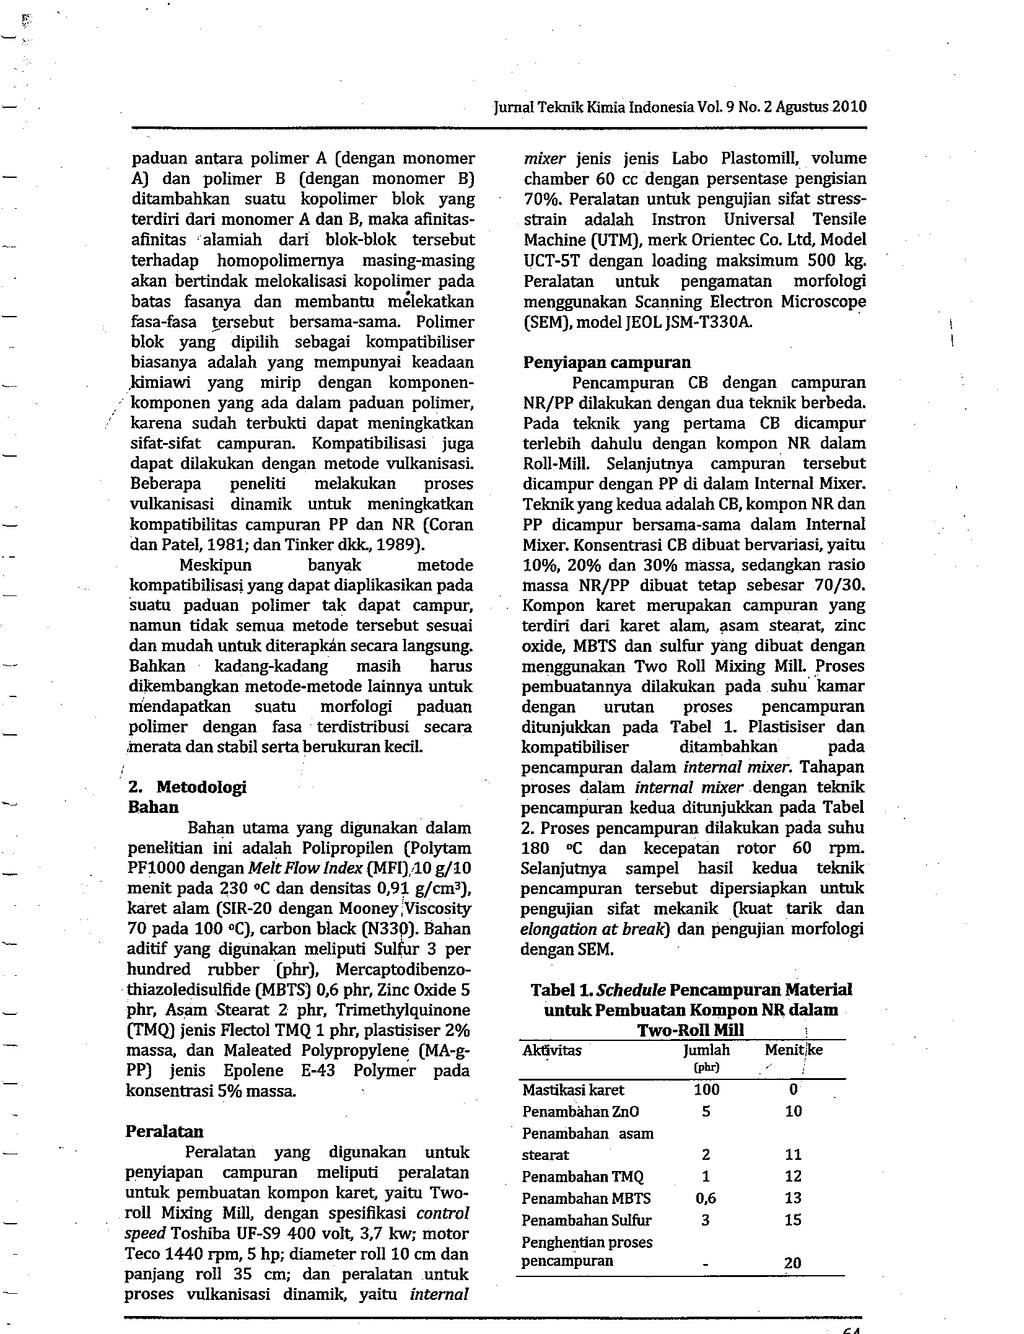 [urnal Teknik Kimia Indonesia Vol.9 No.